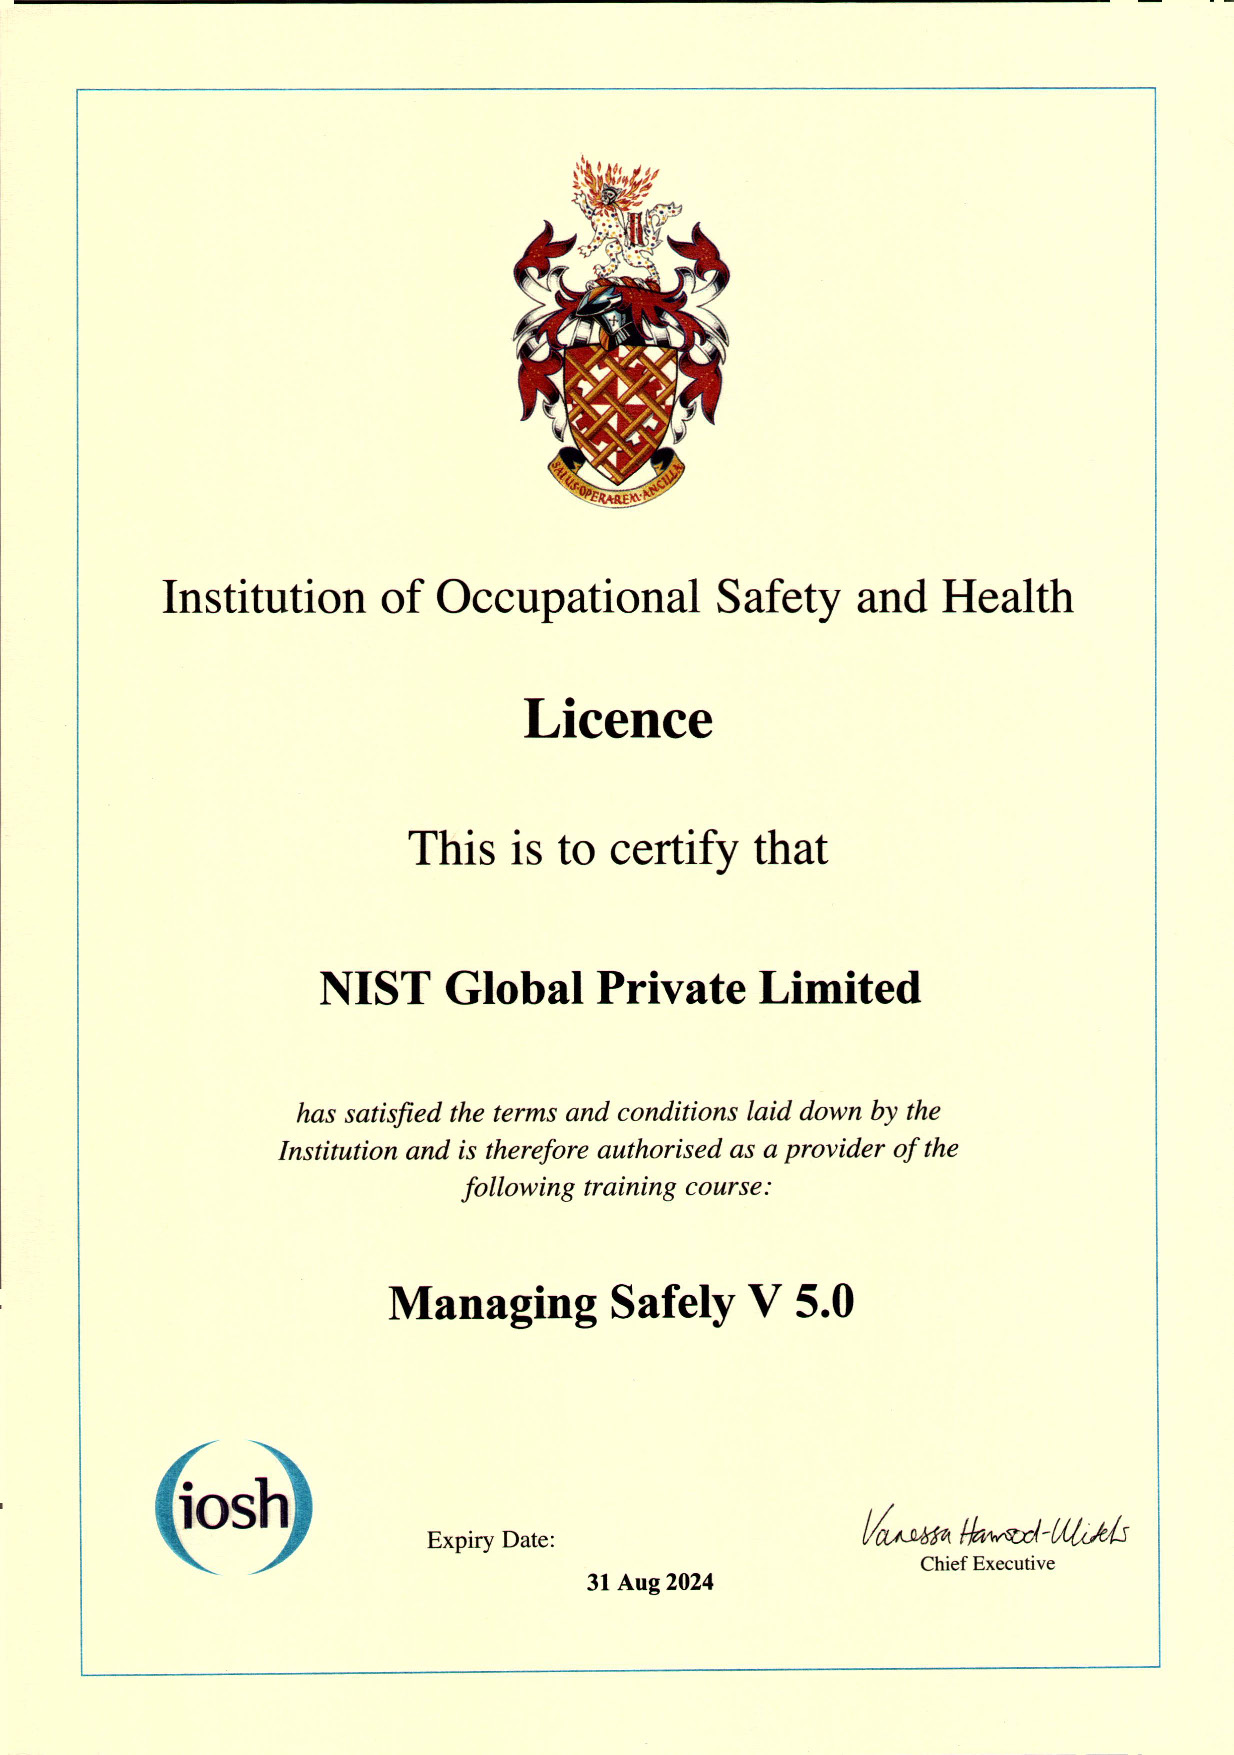 iosh-ms-certificate